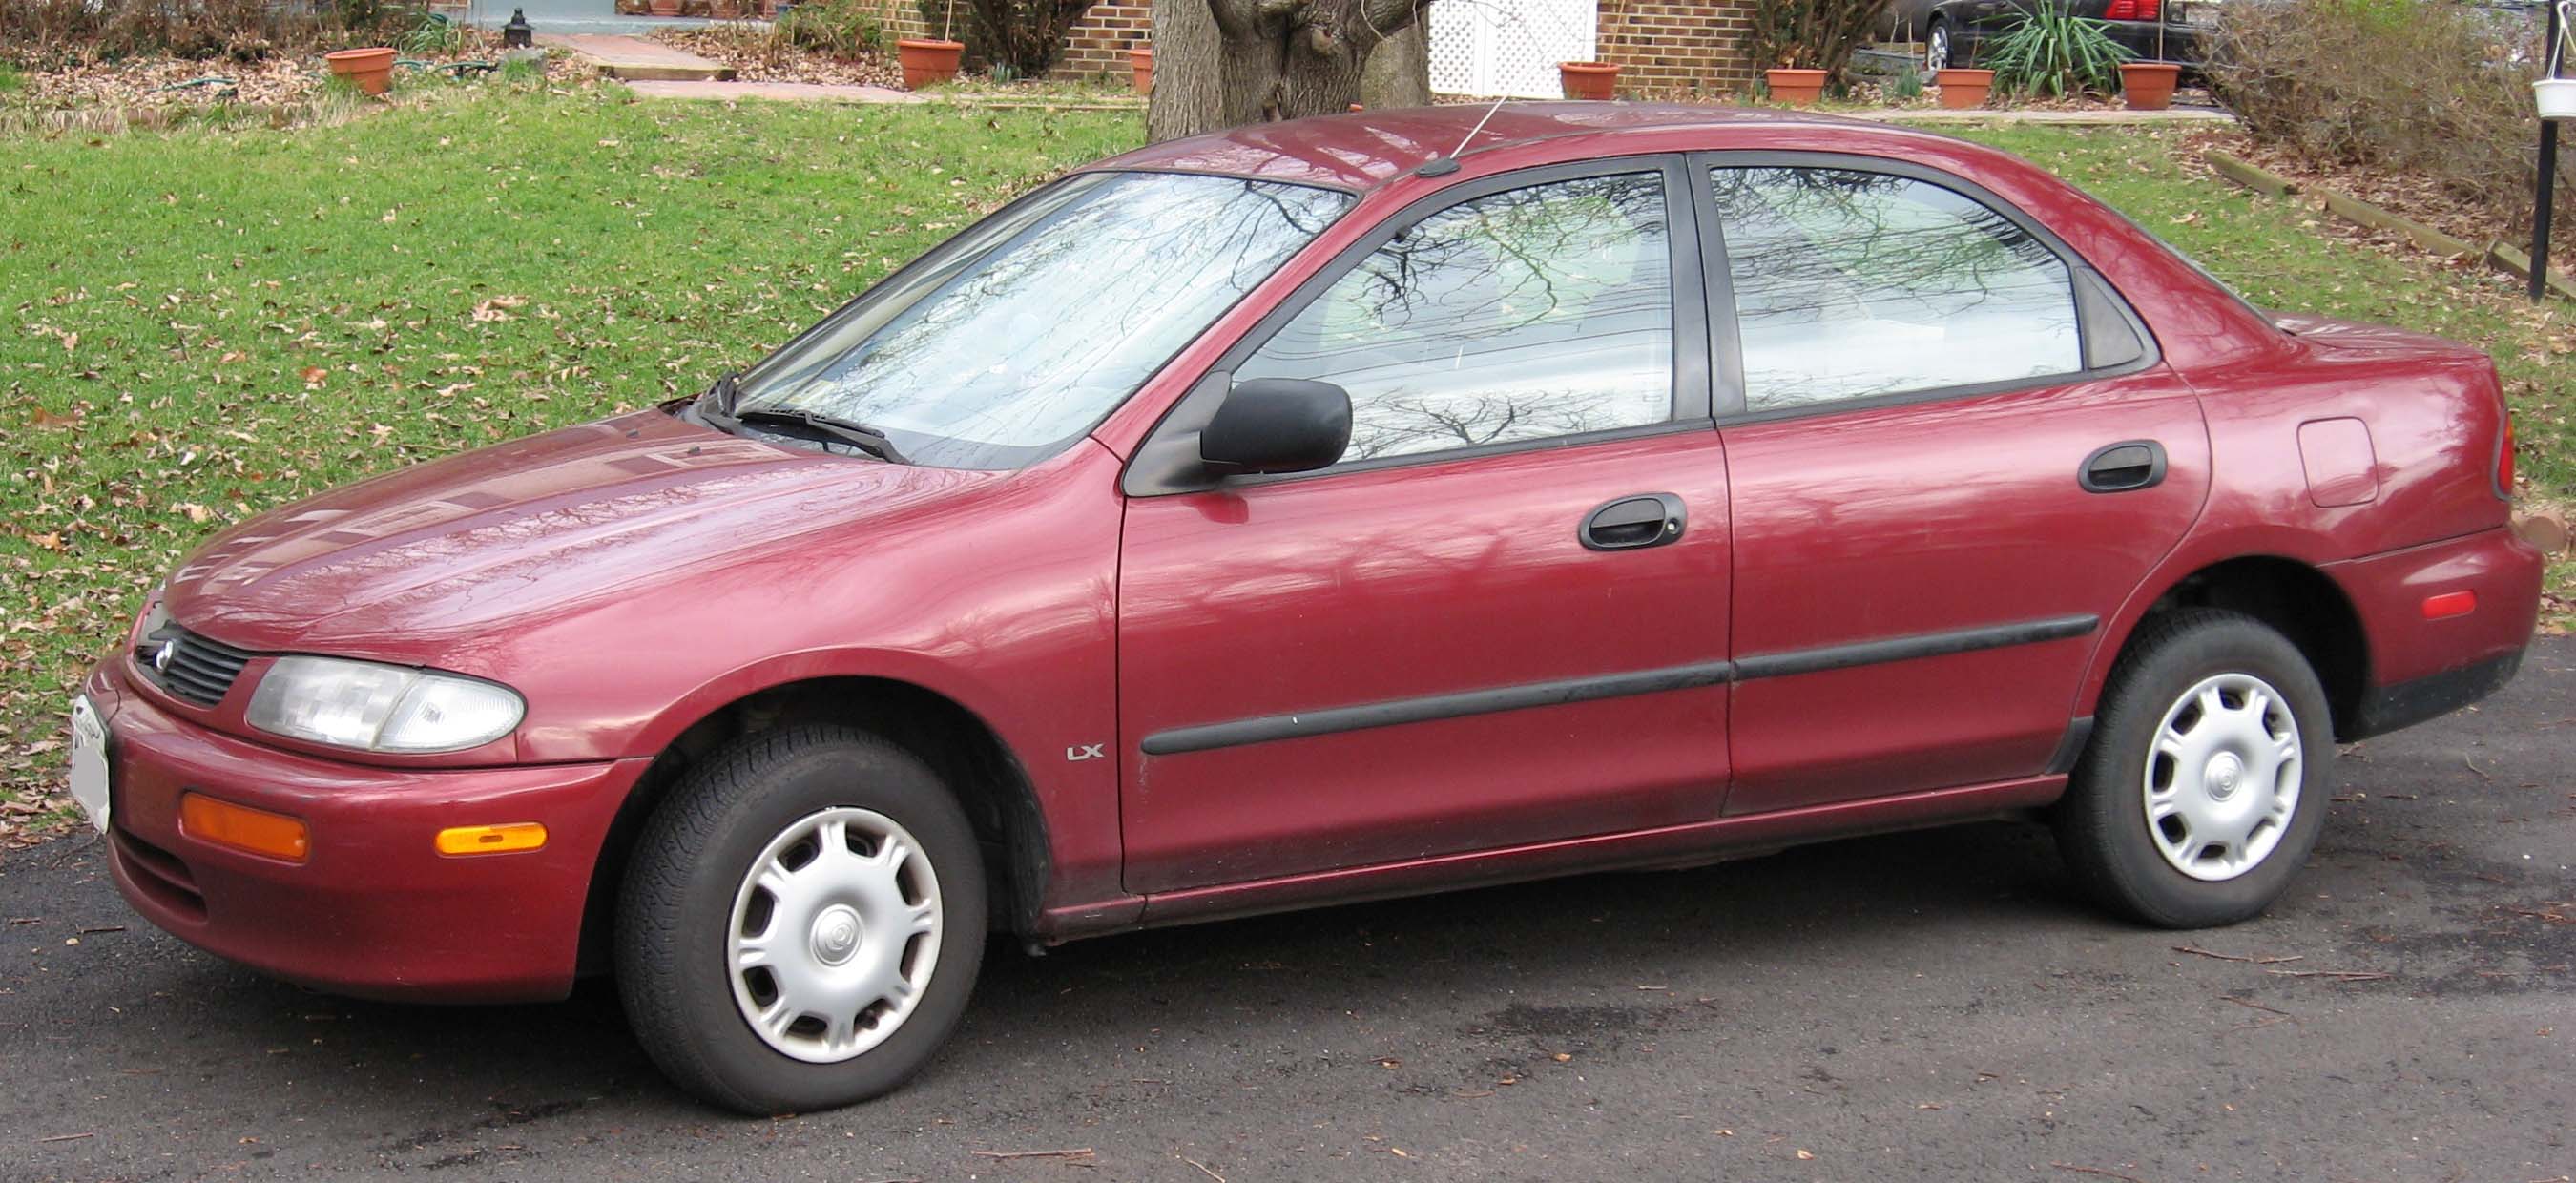 Mazda protege 1996 photo - 2